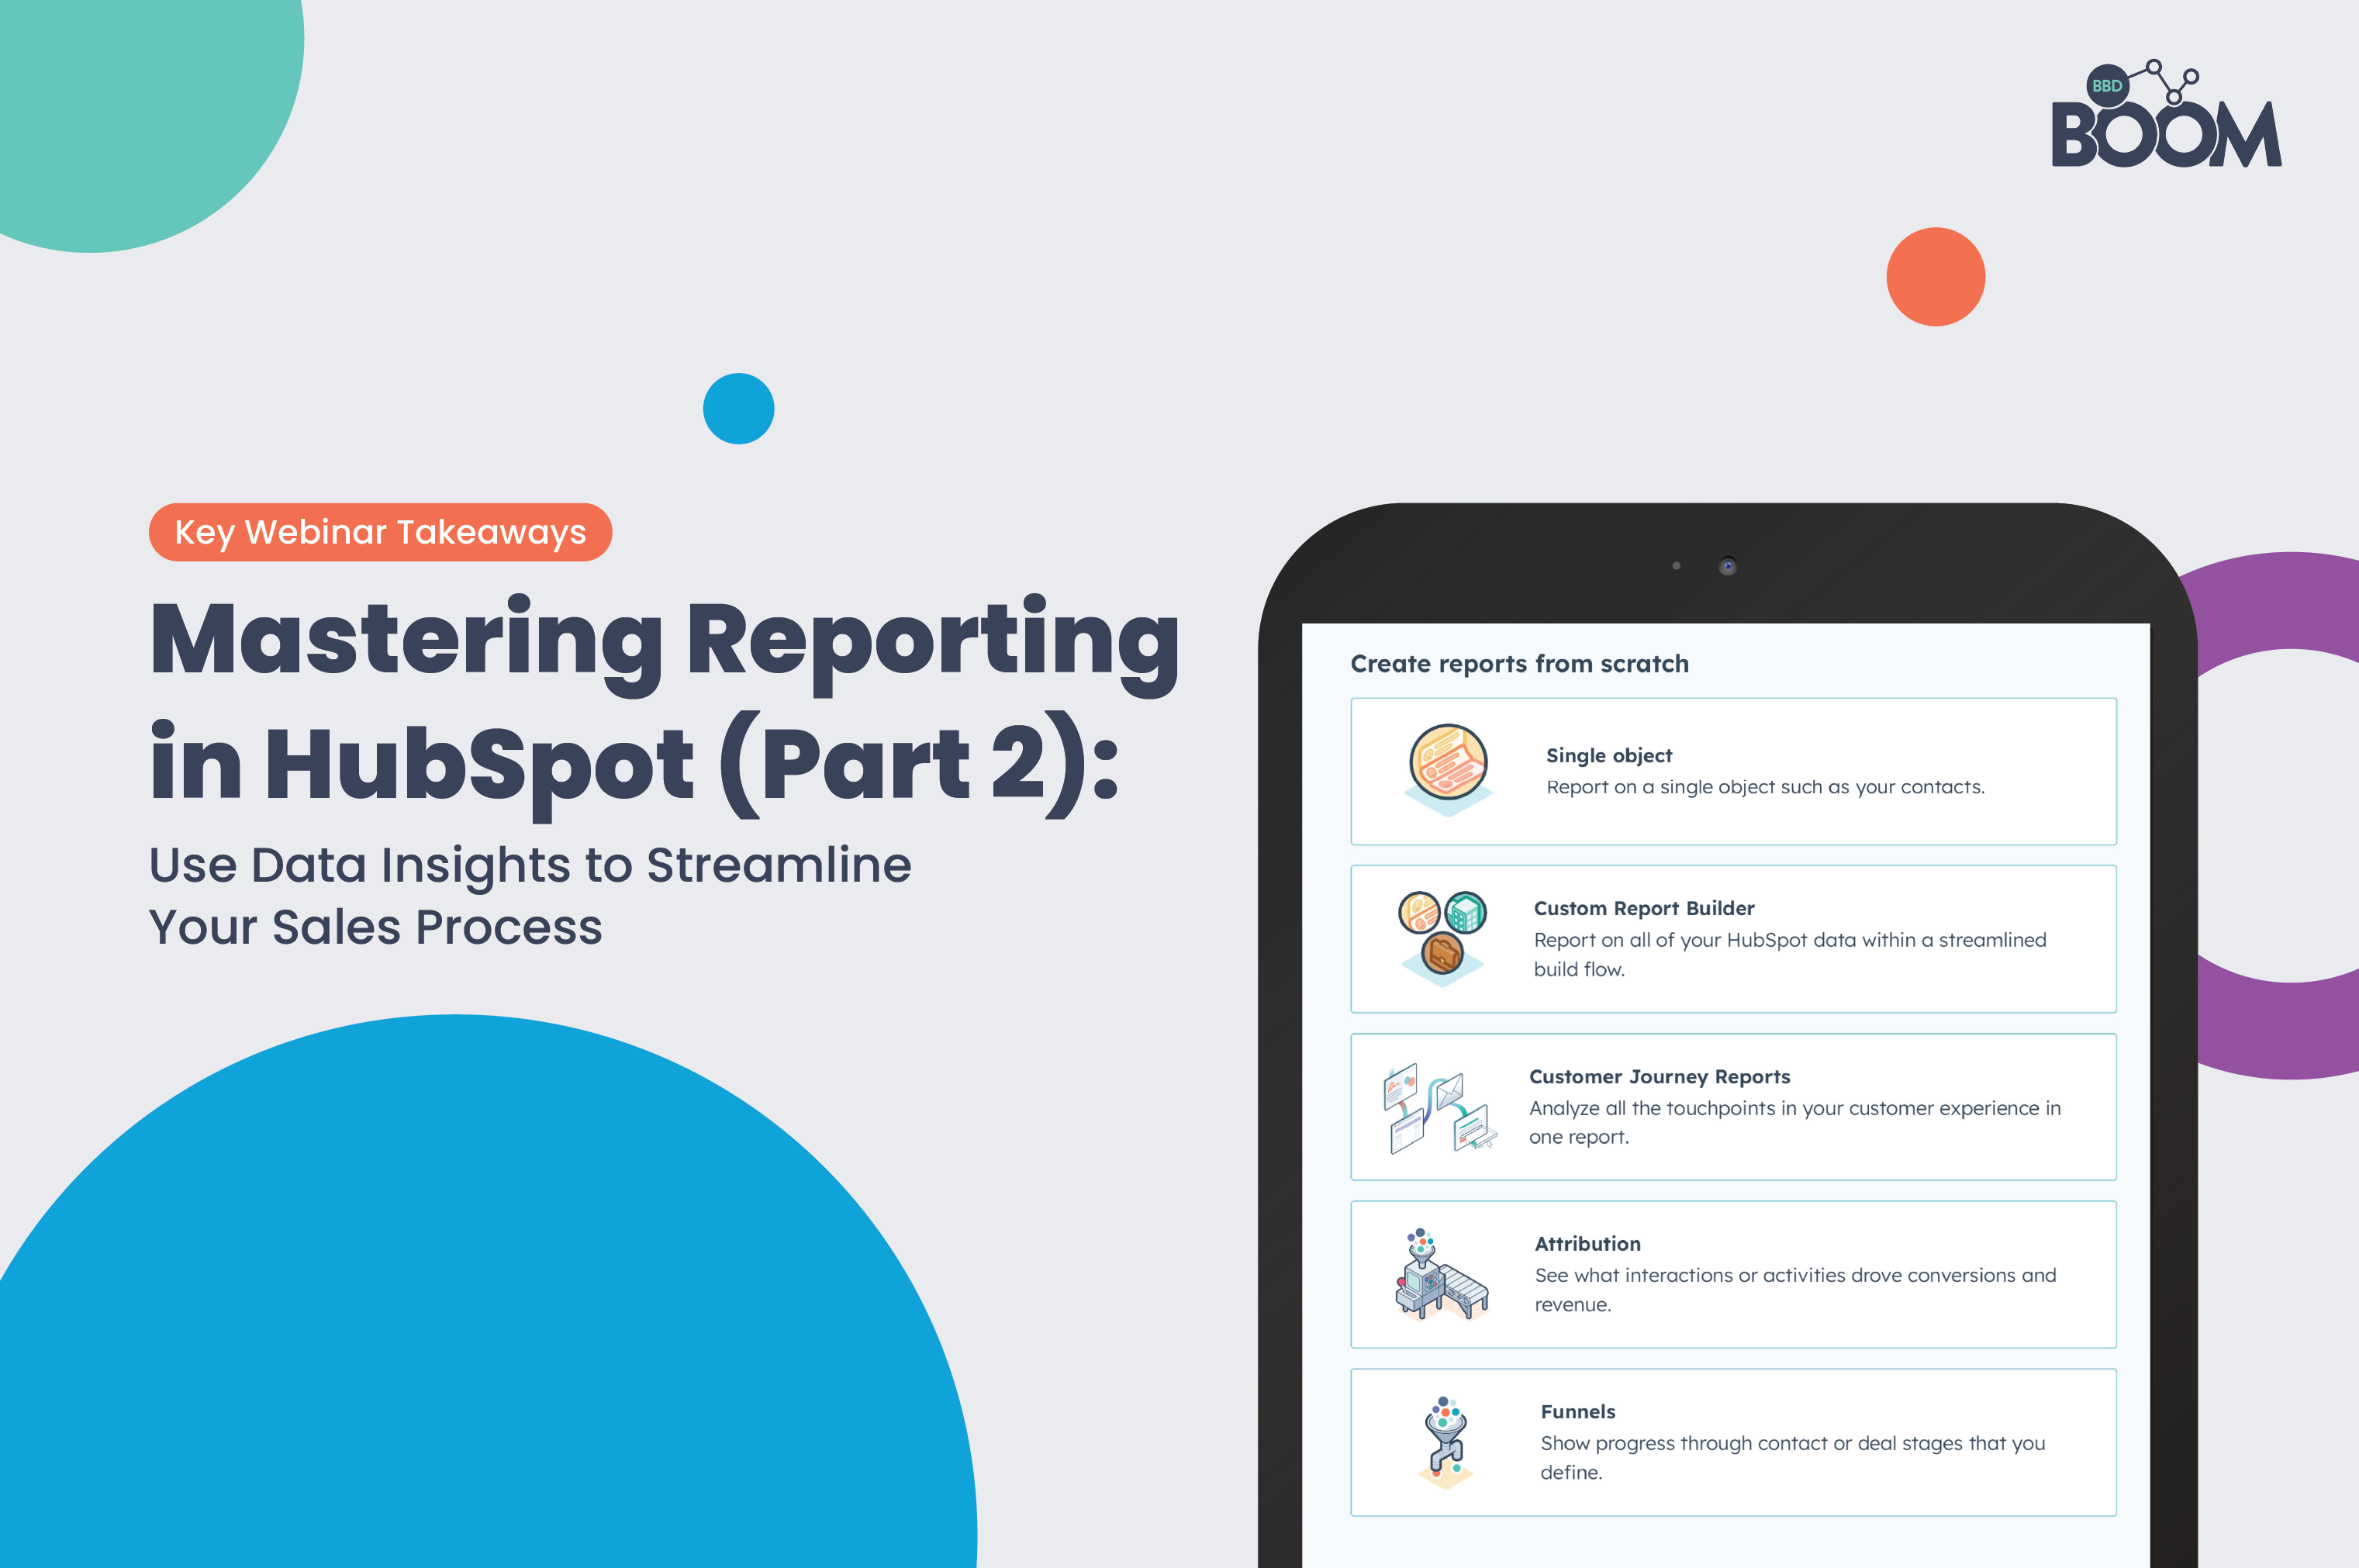 Mastering Reporting in HubSpot (Part 2) Webinar Key Takeaways